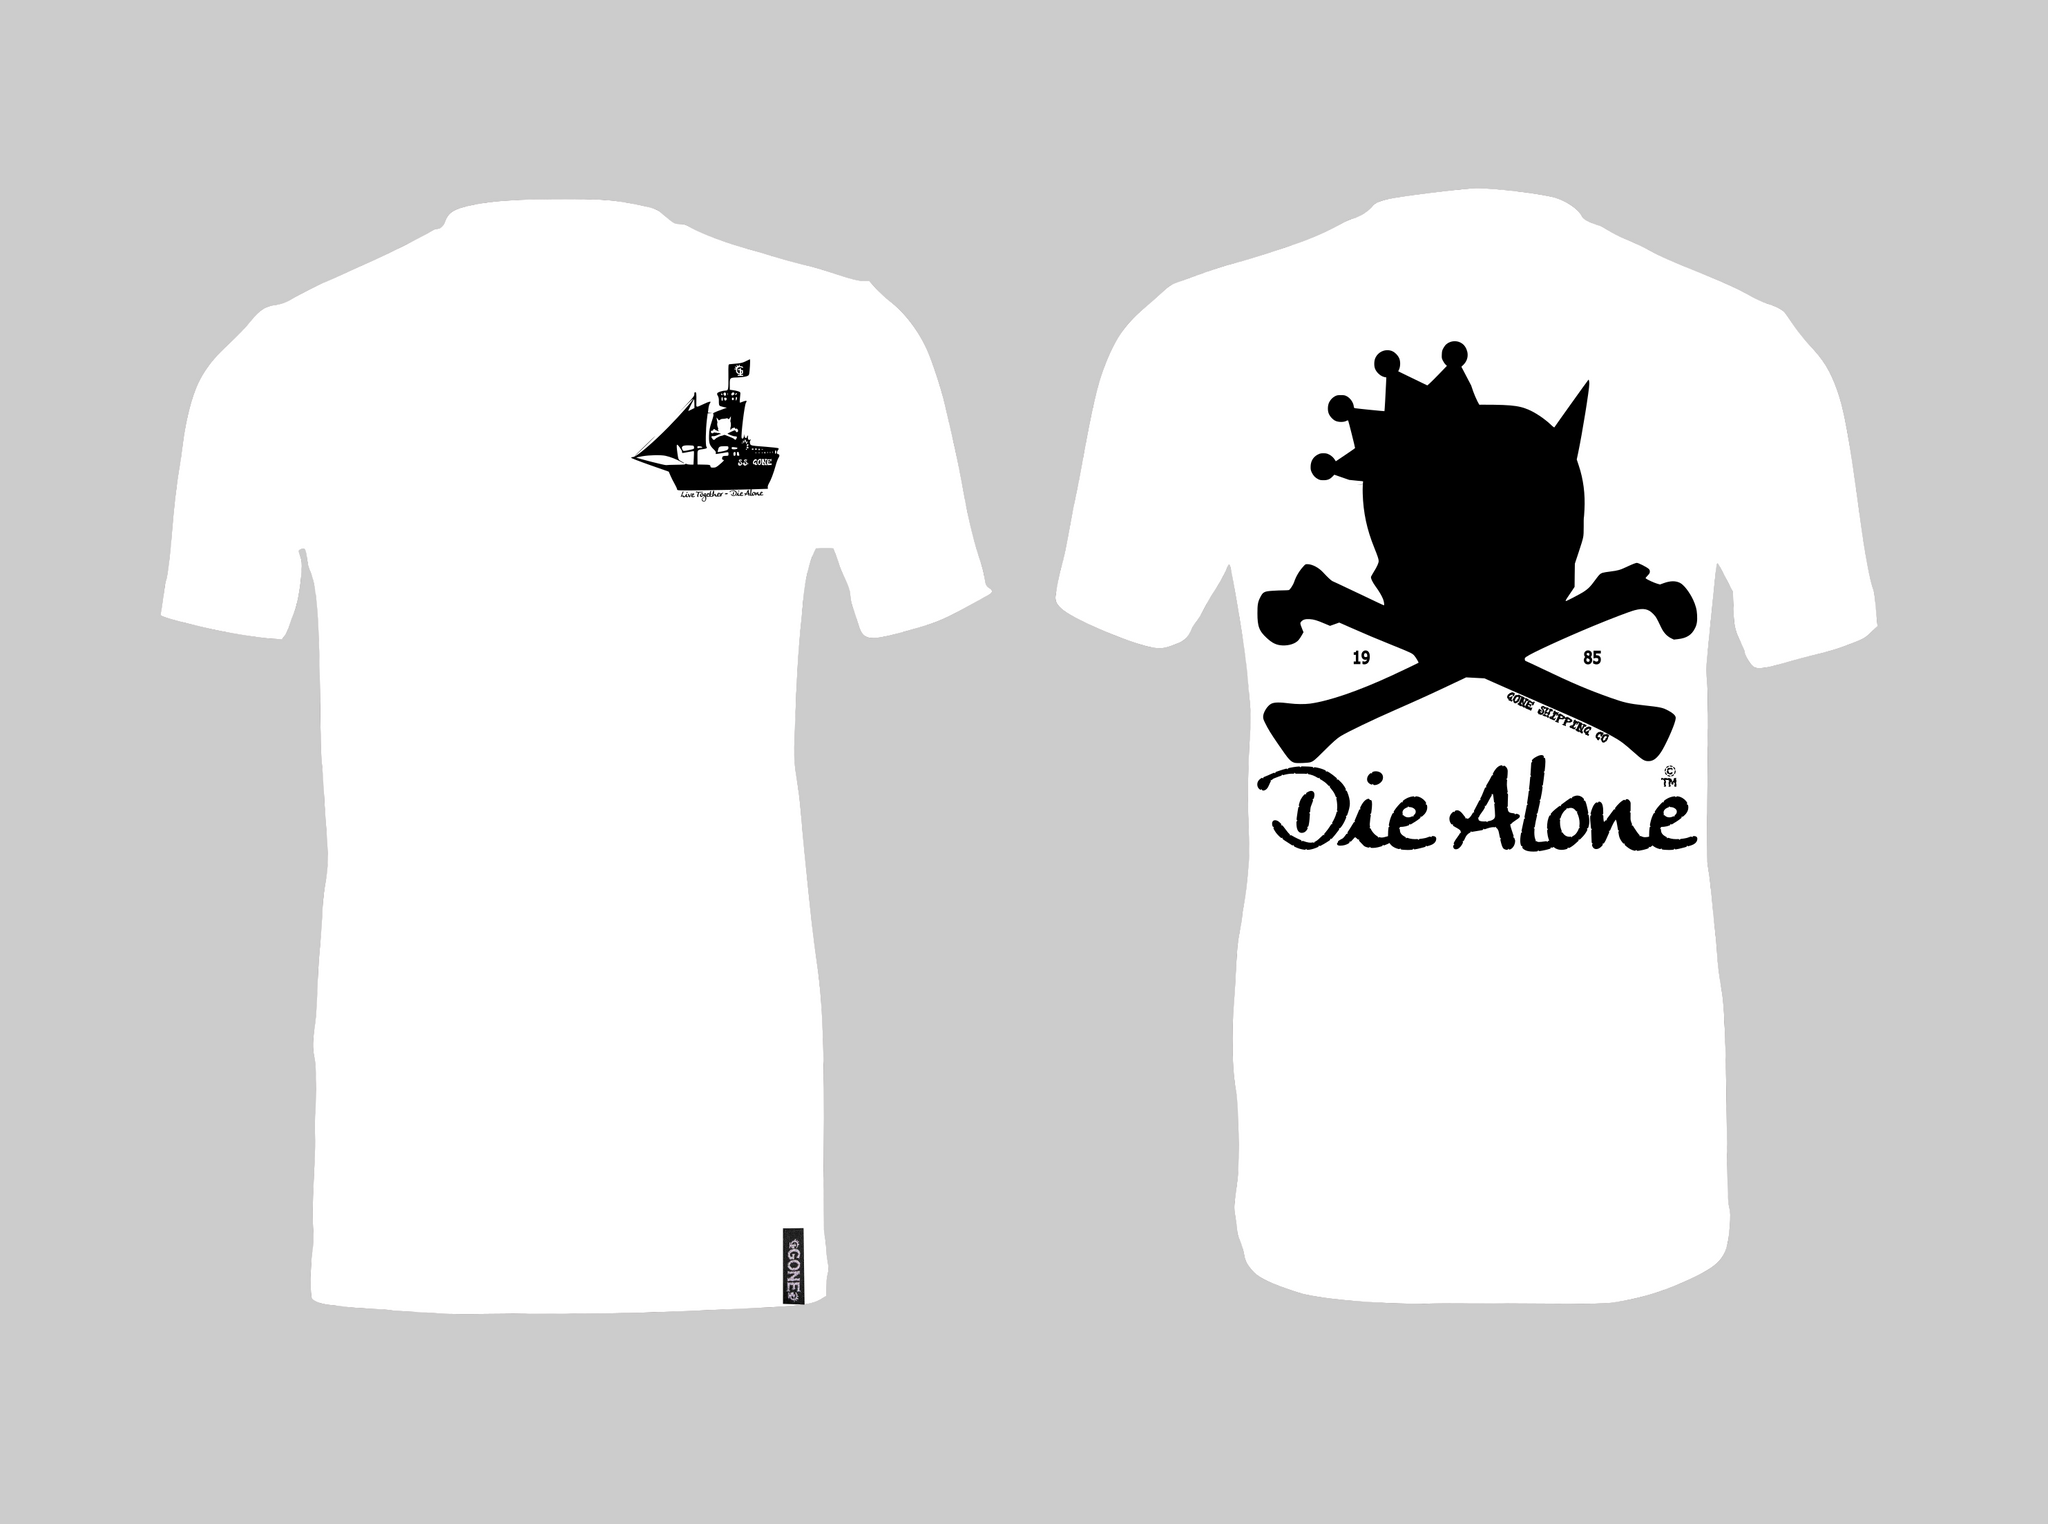 Pirate T-shirt Designs